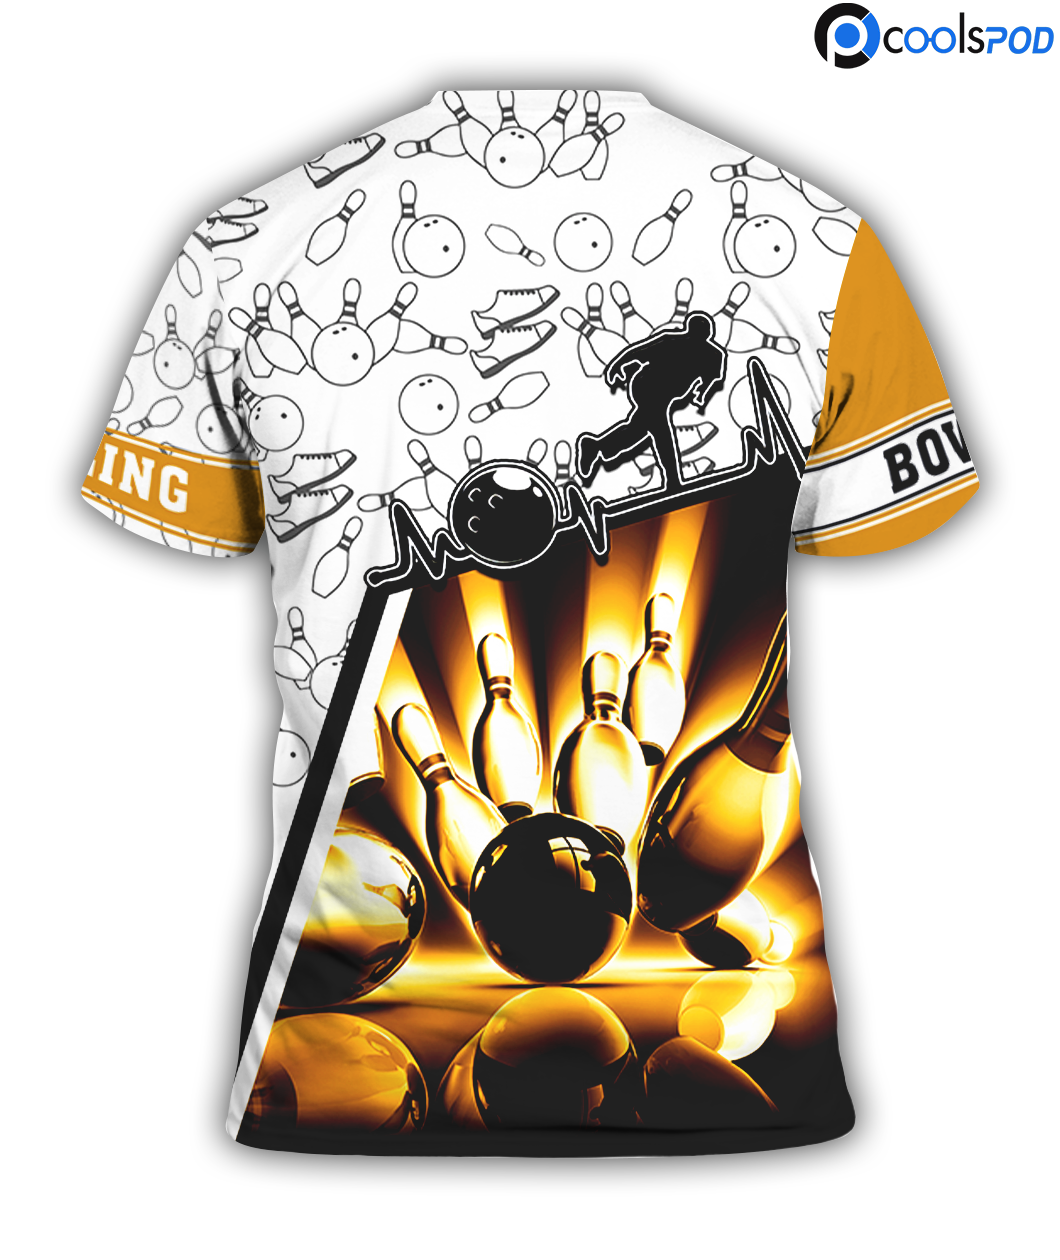 Bowling Shirt Men Women/ Custom Bowling Team Uniform/ Gift For Bowling Player/ Bowling Colorful 3D Tshirt